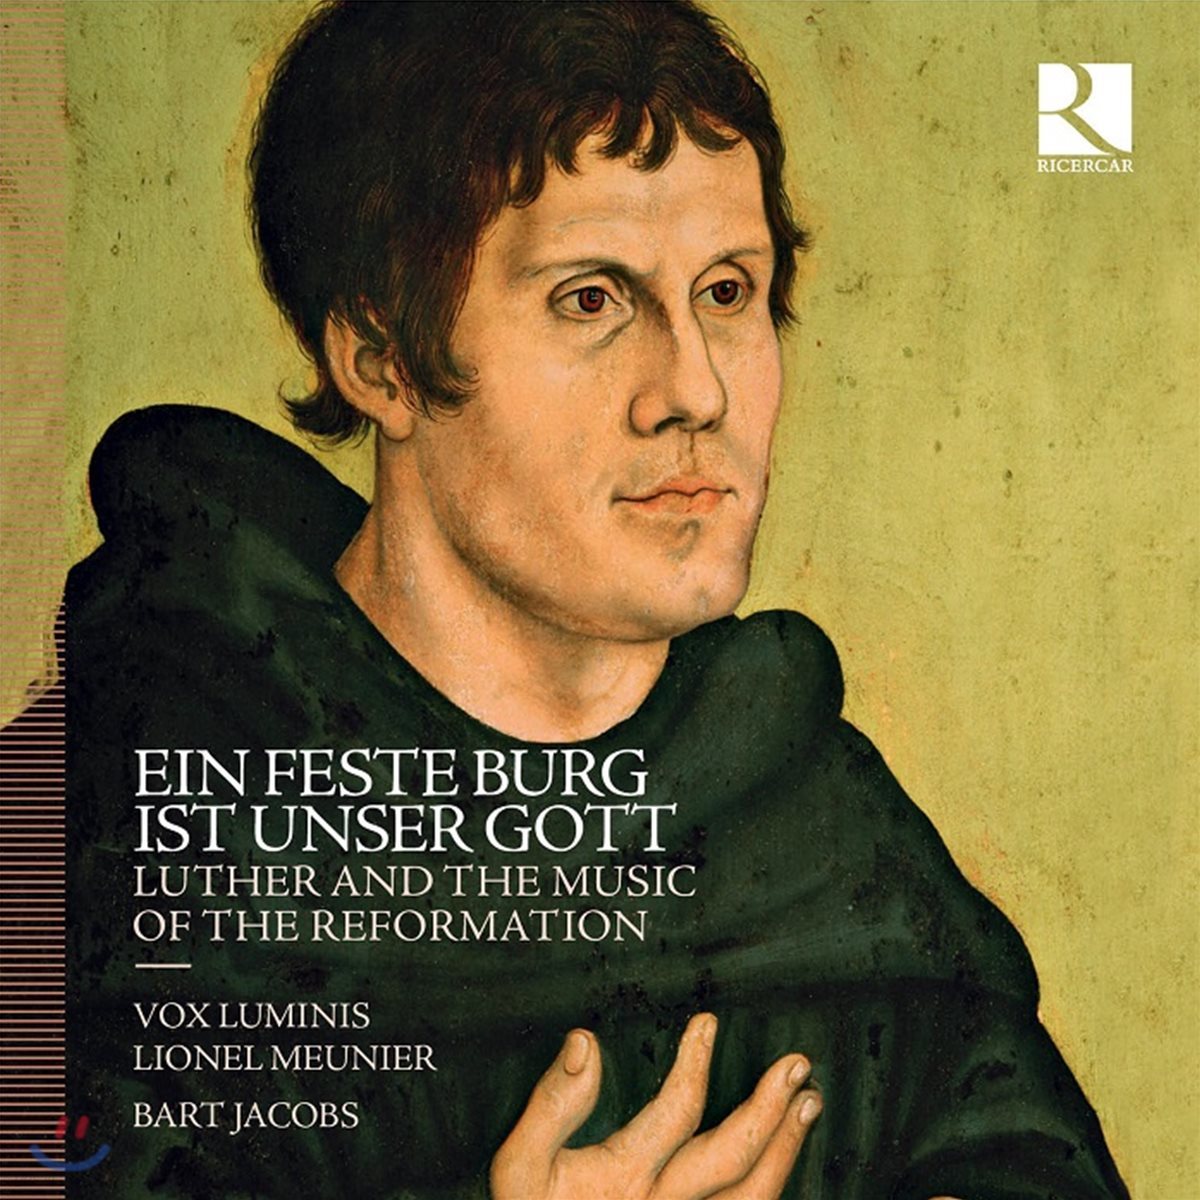 Vox Luminis 루터와 종교개혁의 음악 (Ein Feste Burg ist Unser Gott - Luther and the Music of the Reformation)